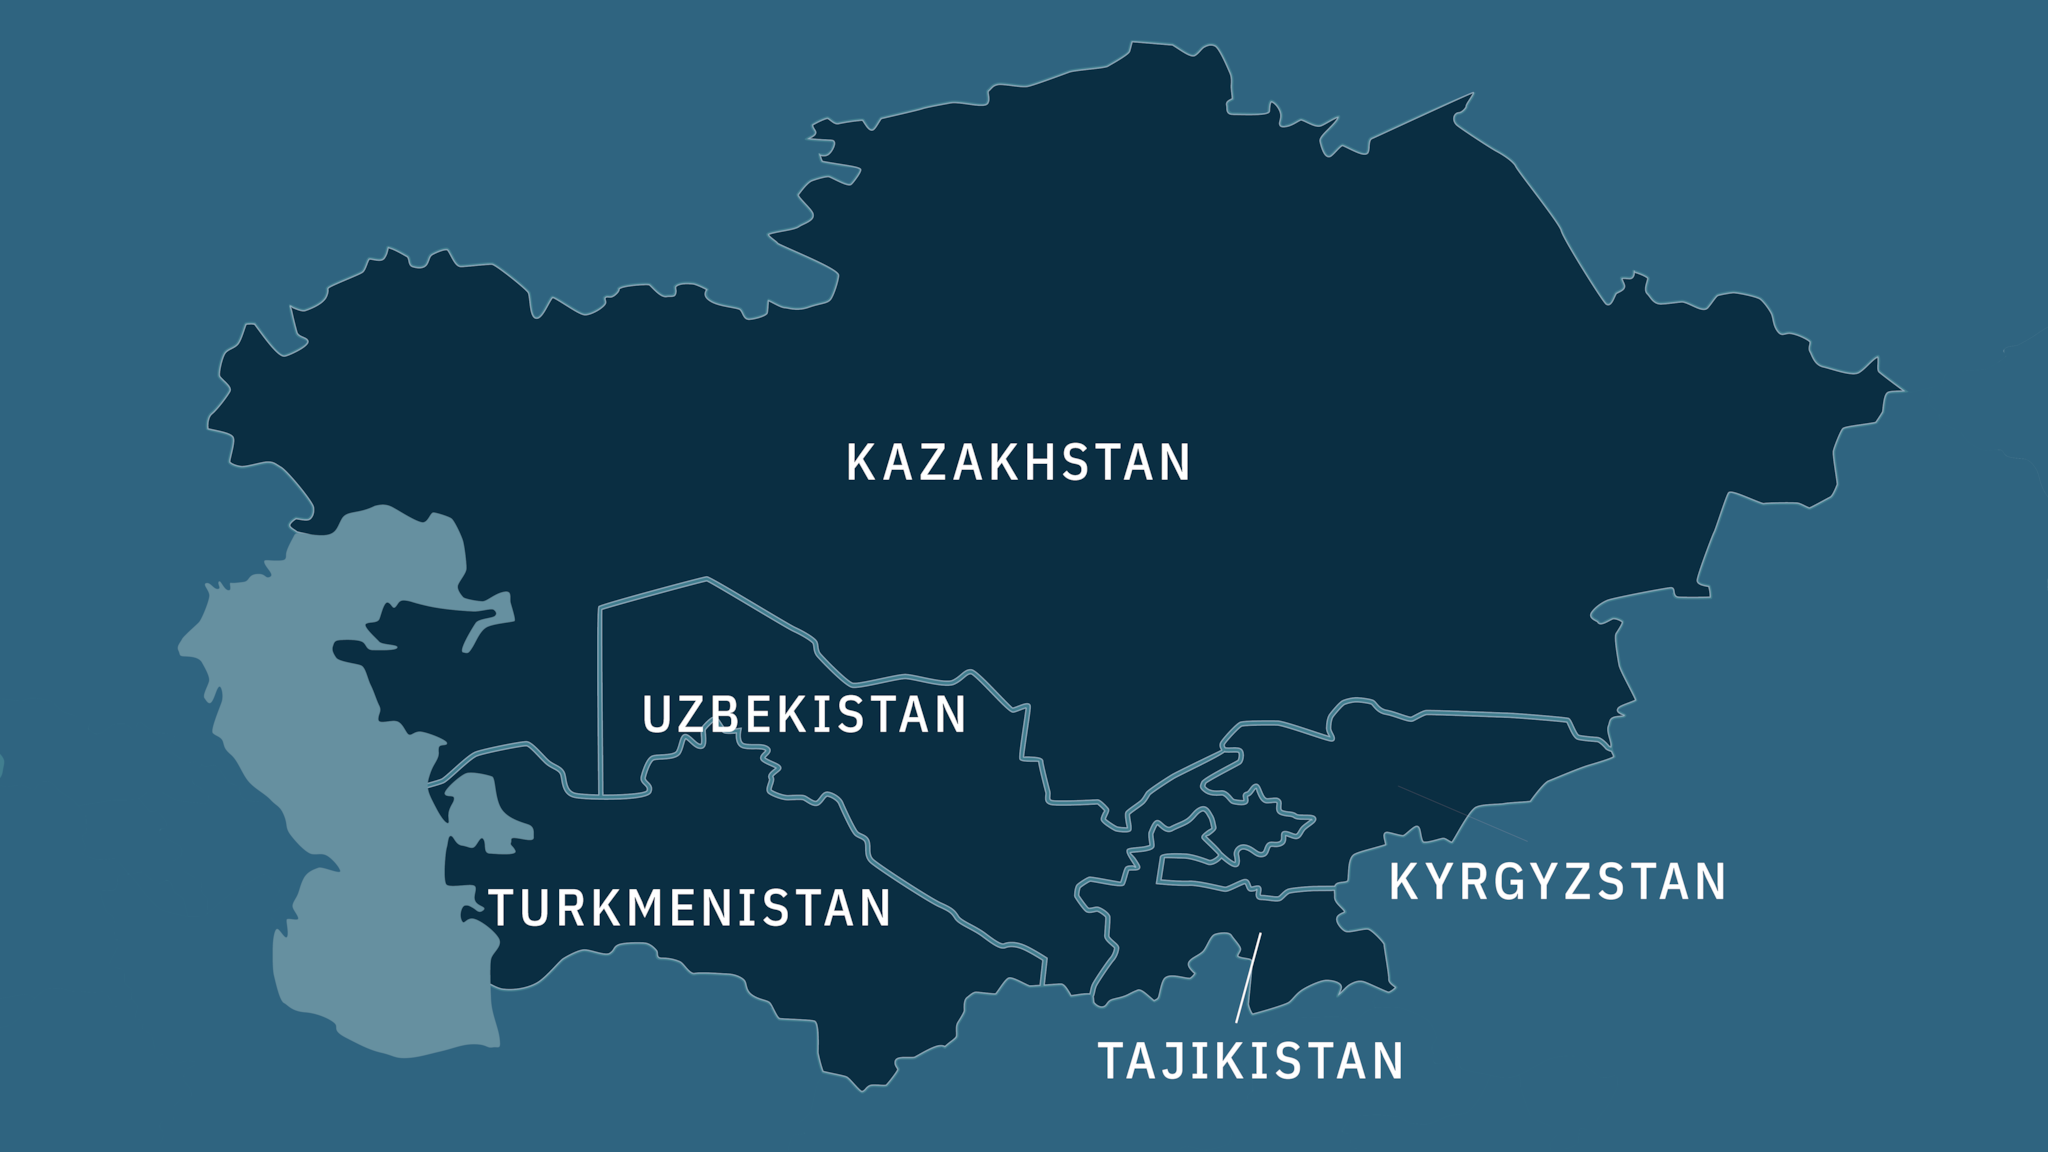 Map showing Kazakhstan, Kyrgyzstan, Tajikistan, Uzbekistan, and Turkmenistan.